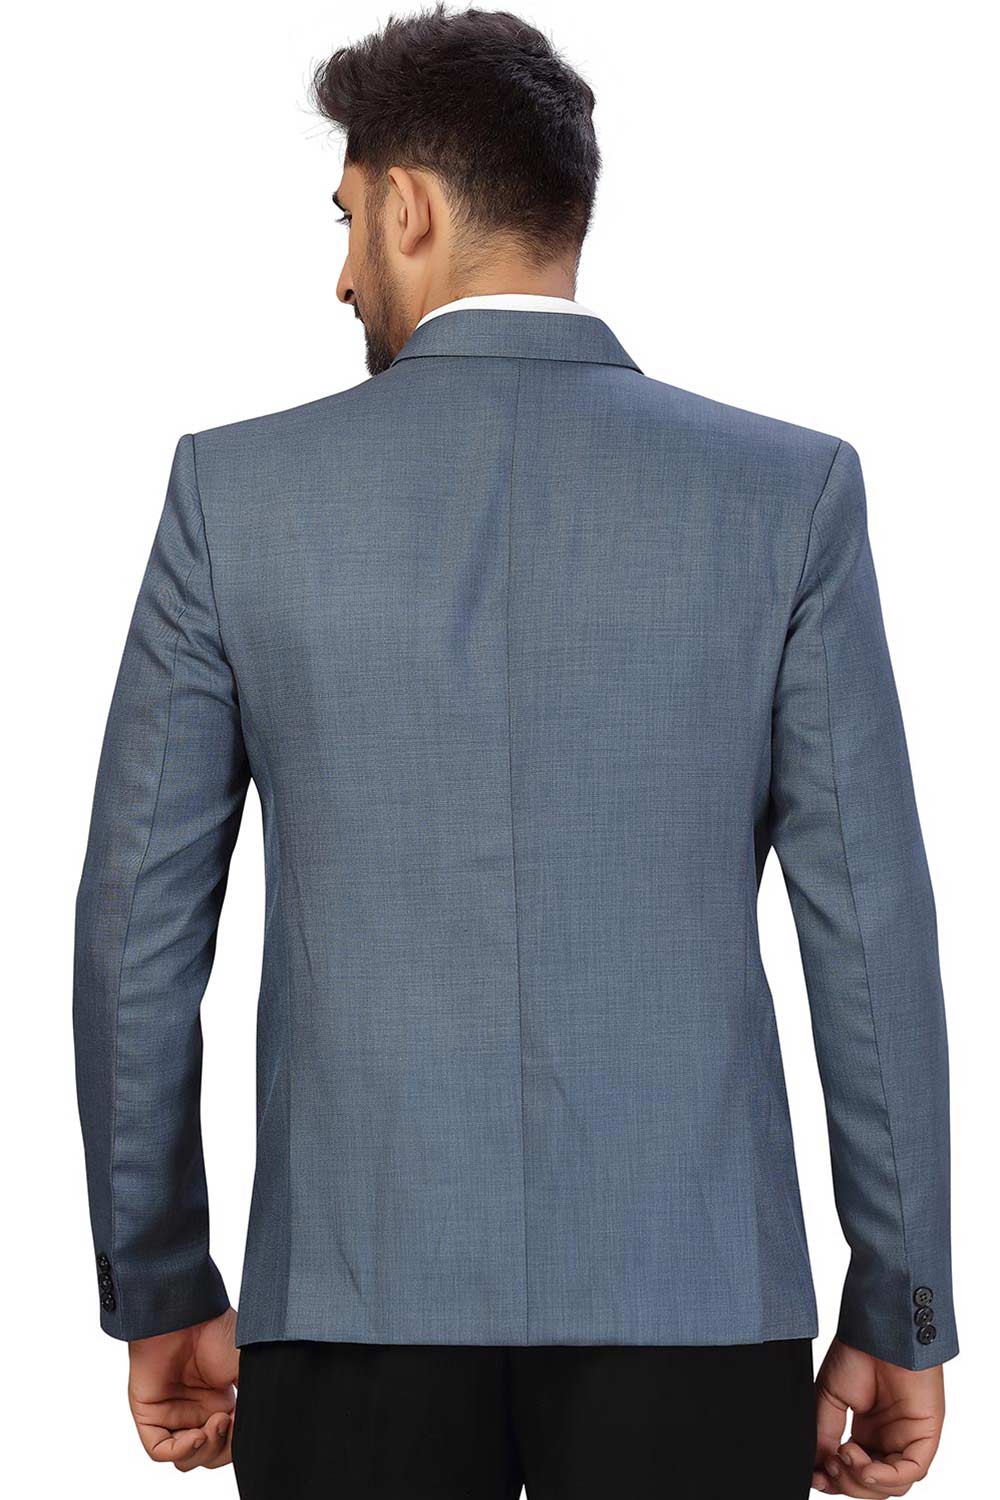 Buy Men's Suiting Fabric  Solid Blazer in Grey Online - Back